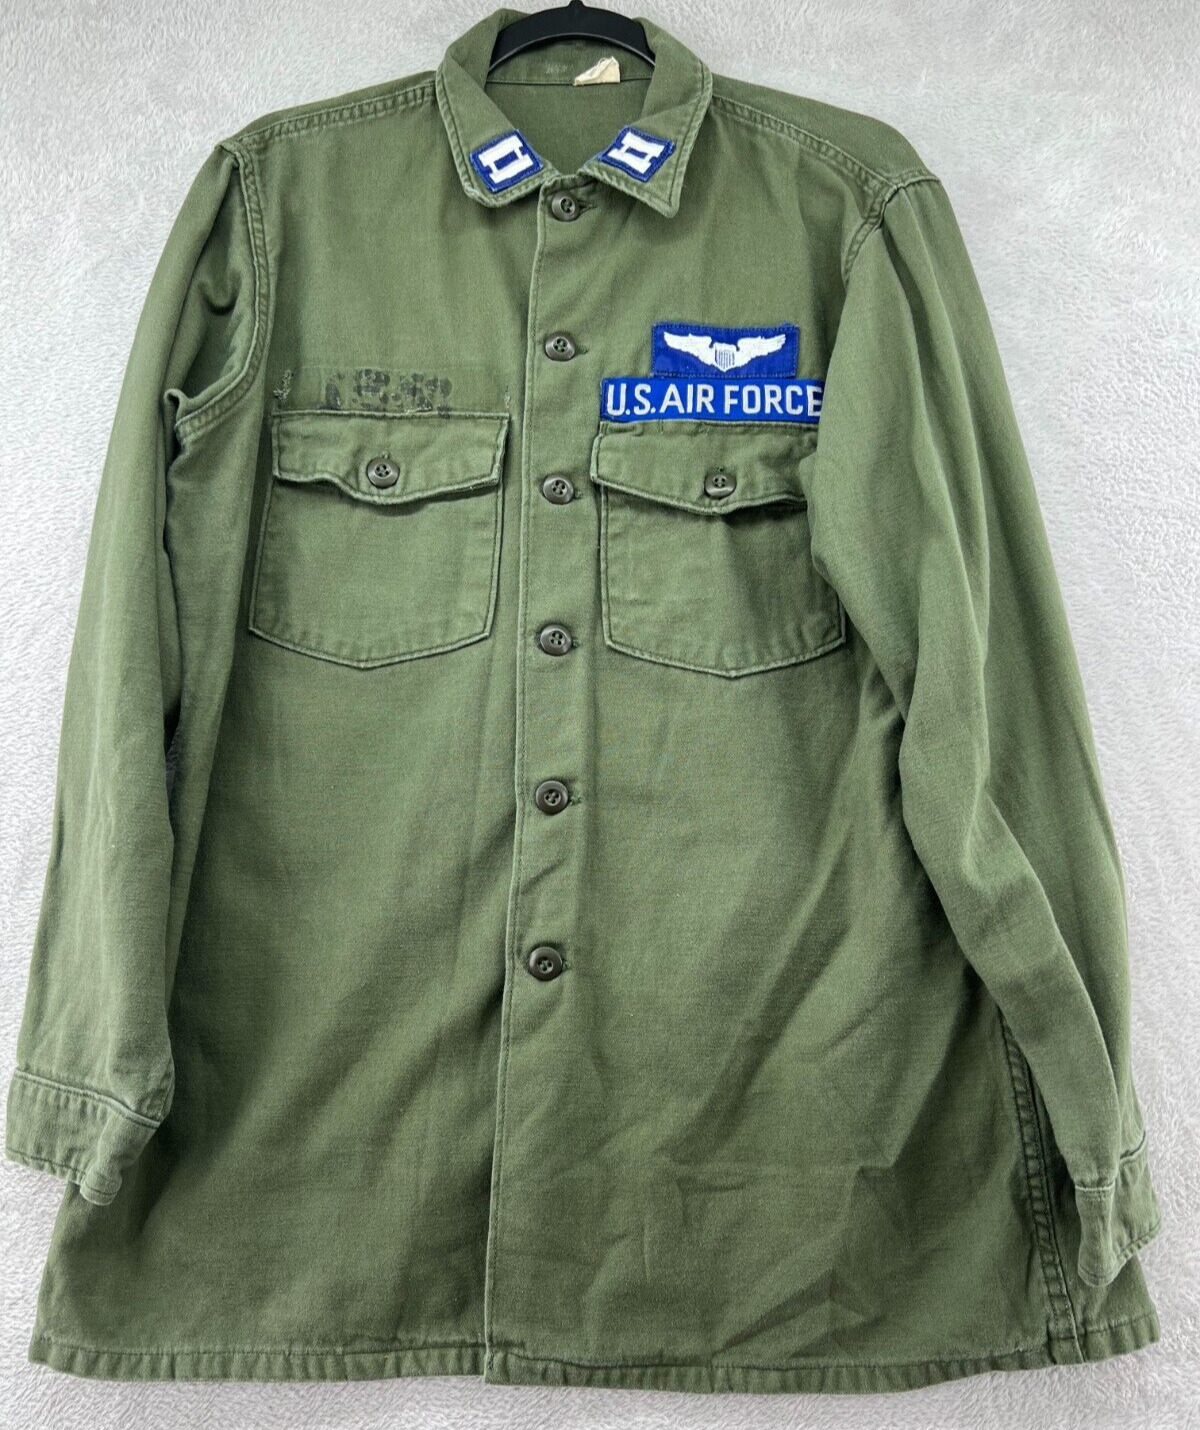 US Air Force OG-107 Fatigue Shirt 1968? Size 16 1/2 x 34